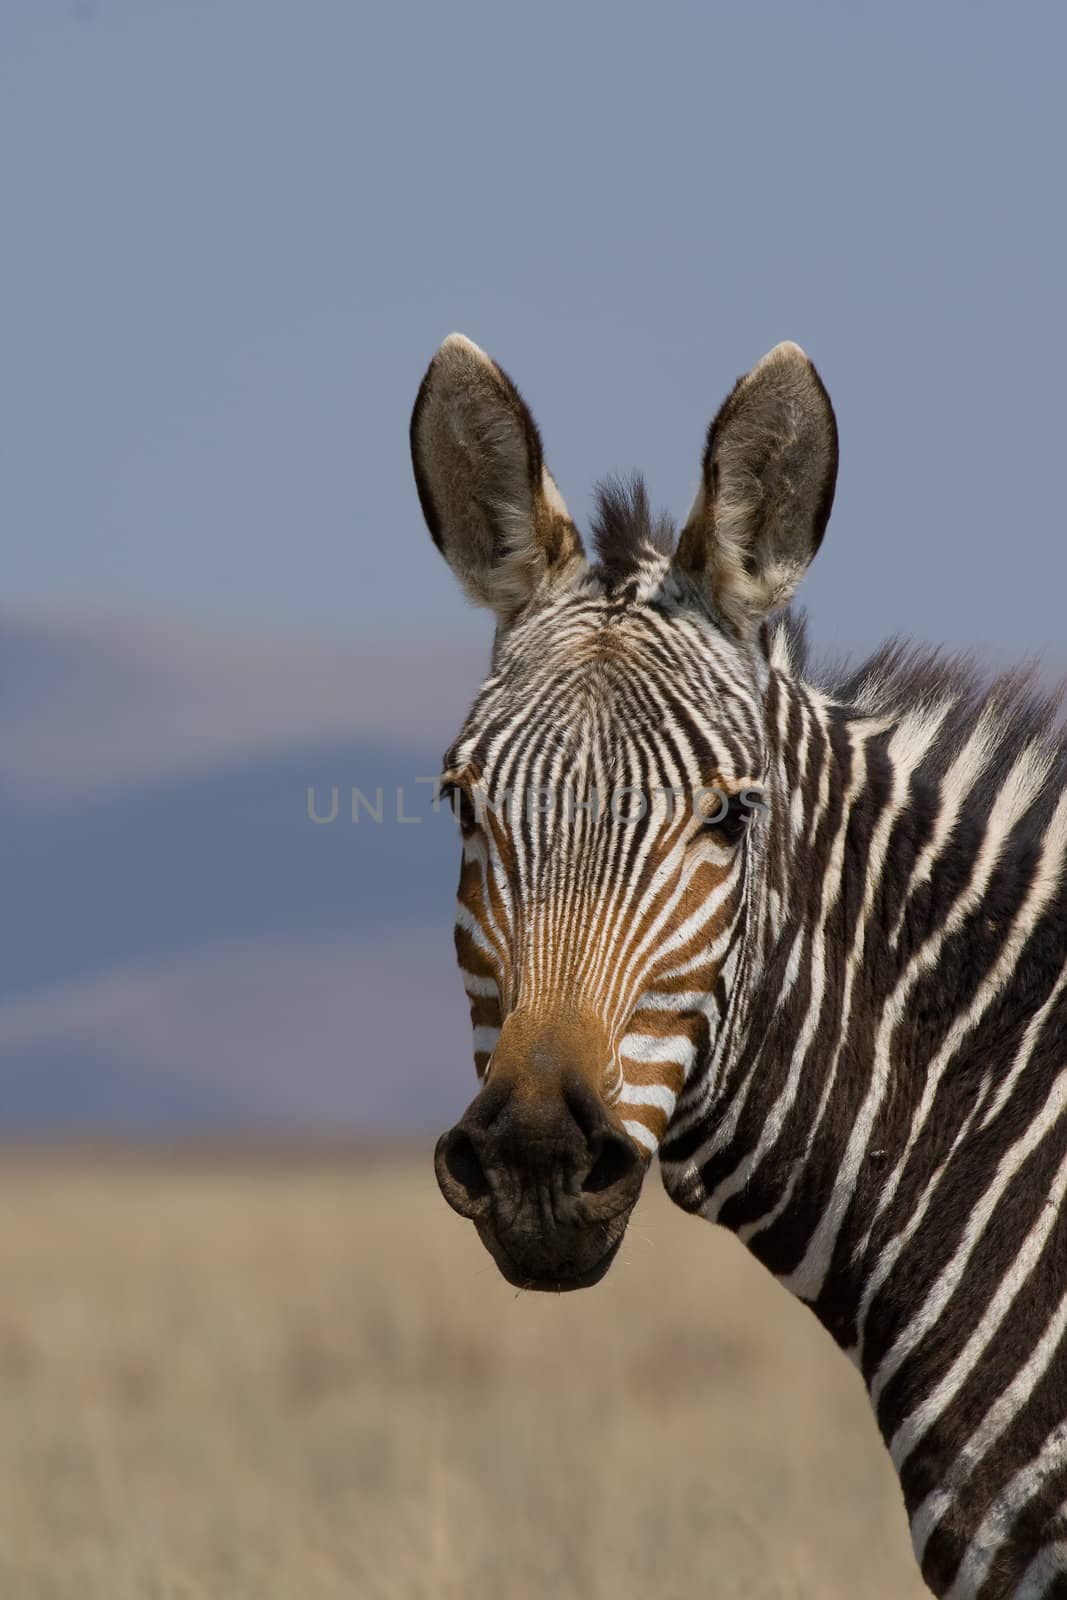 Potrait of a rare and endangered Mountain Zebra